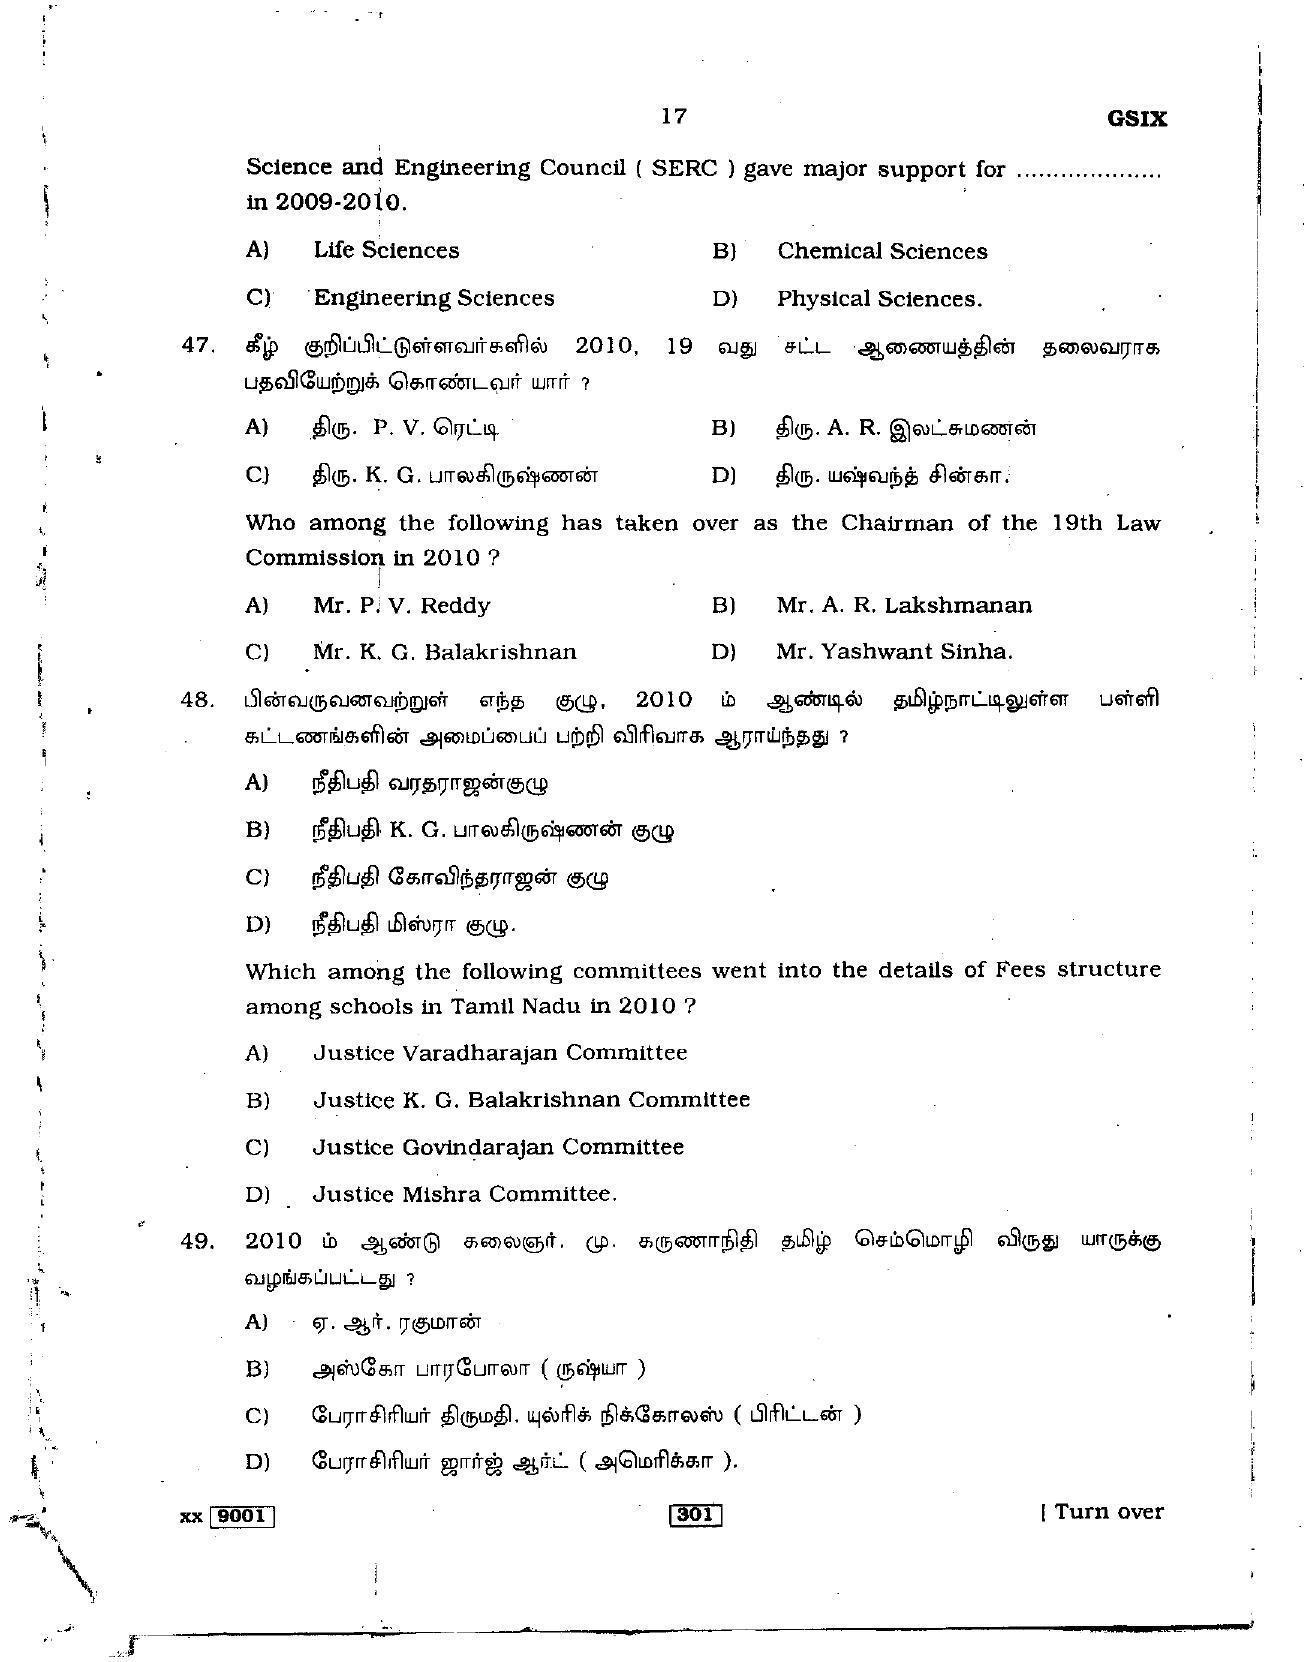 Delhi High Court Junior Judicial Assistant General Knowledge Previous Question Paper - Page 36